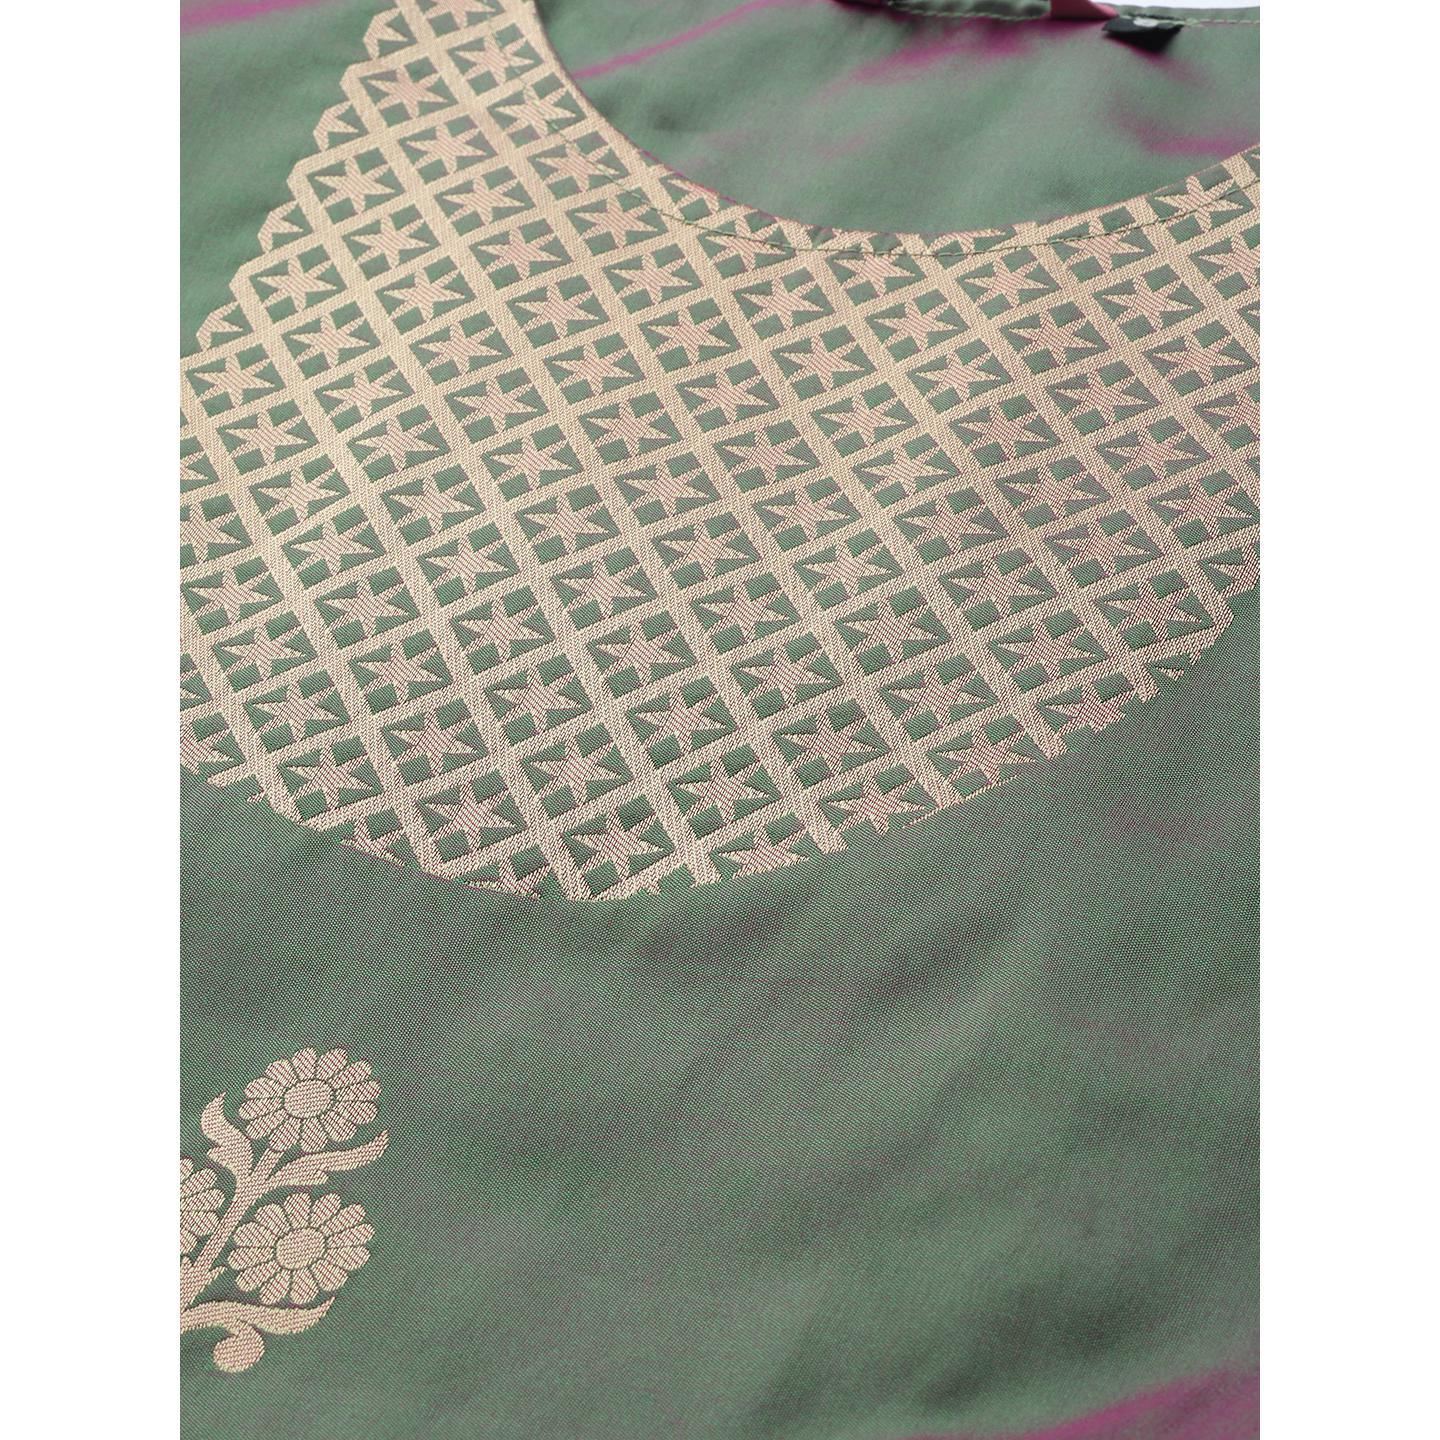 Blissta - Women's Olive Colored Banarasi Silk Straight Kurti - Peachmode